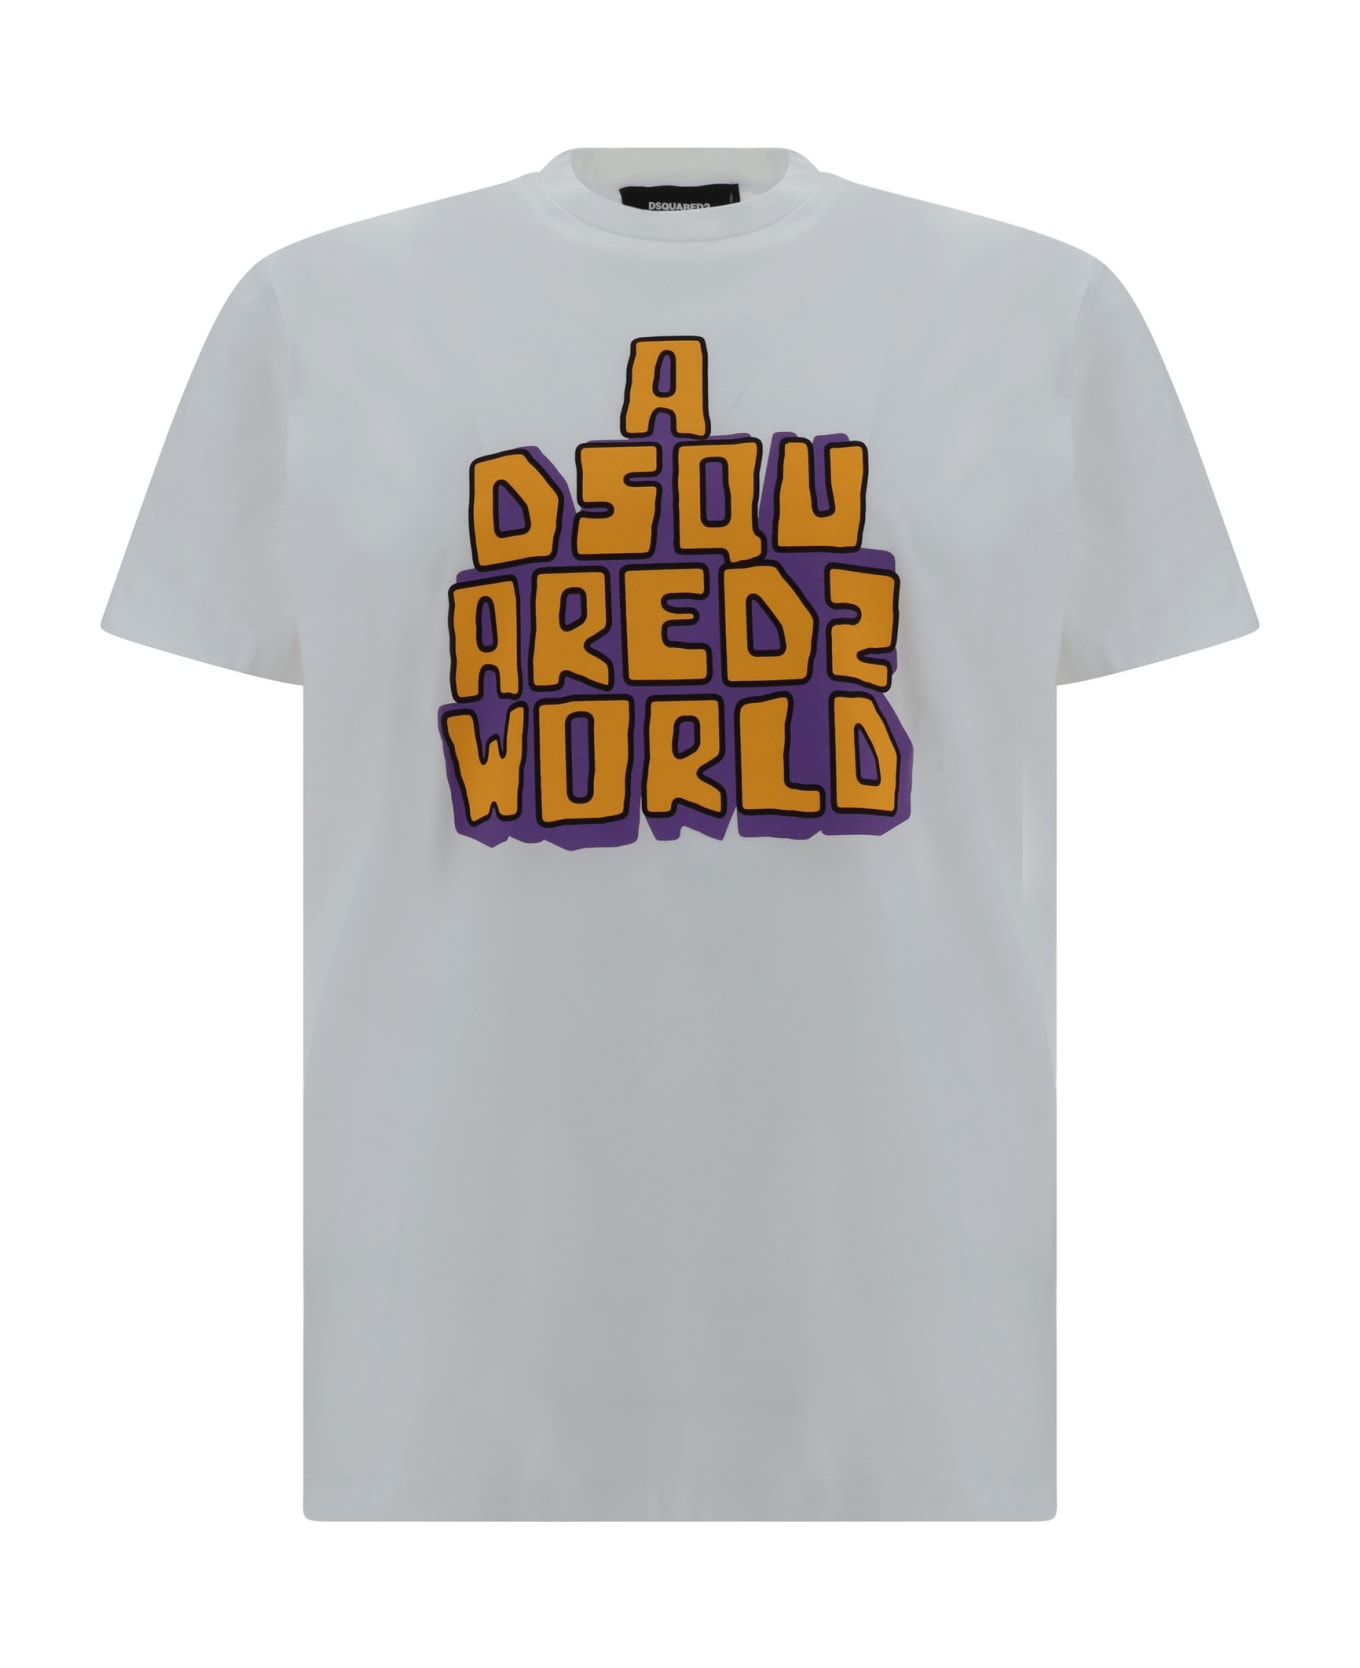 Dsquared2 T-shirt - 100 シャツ